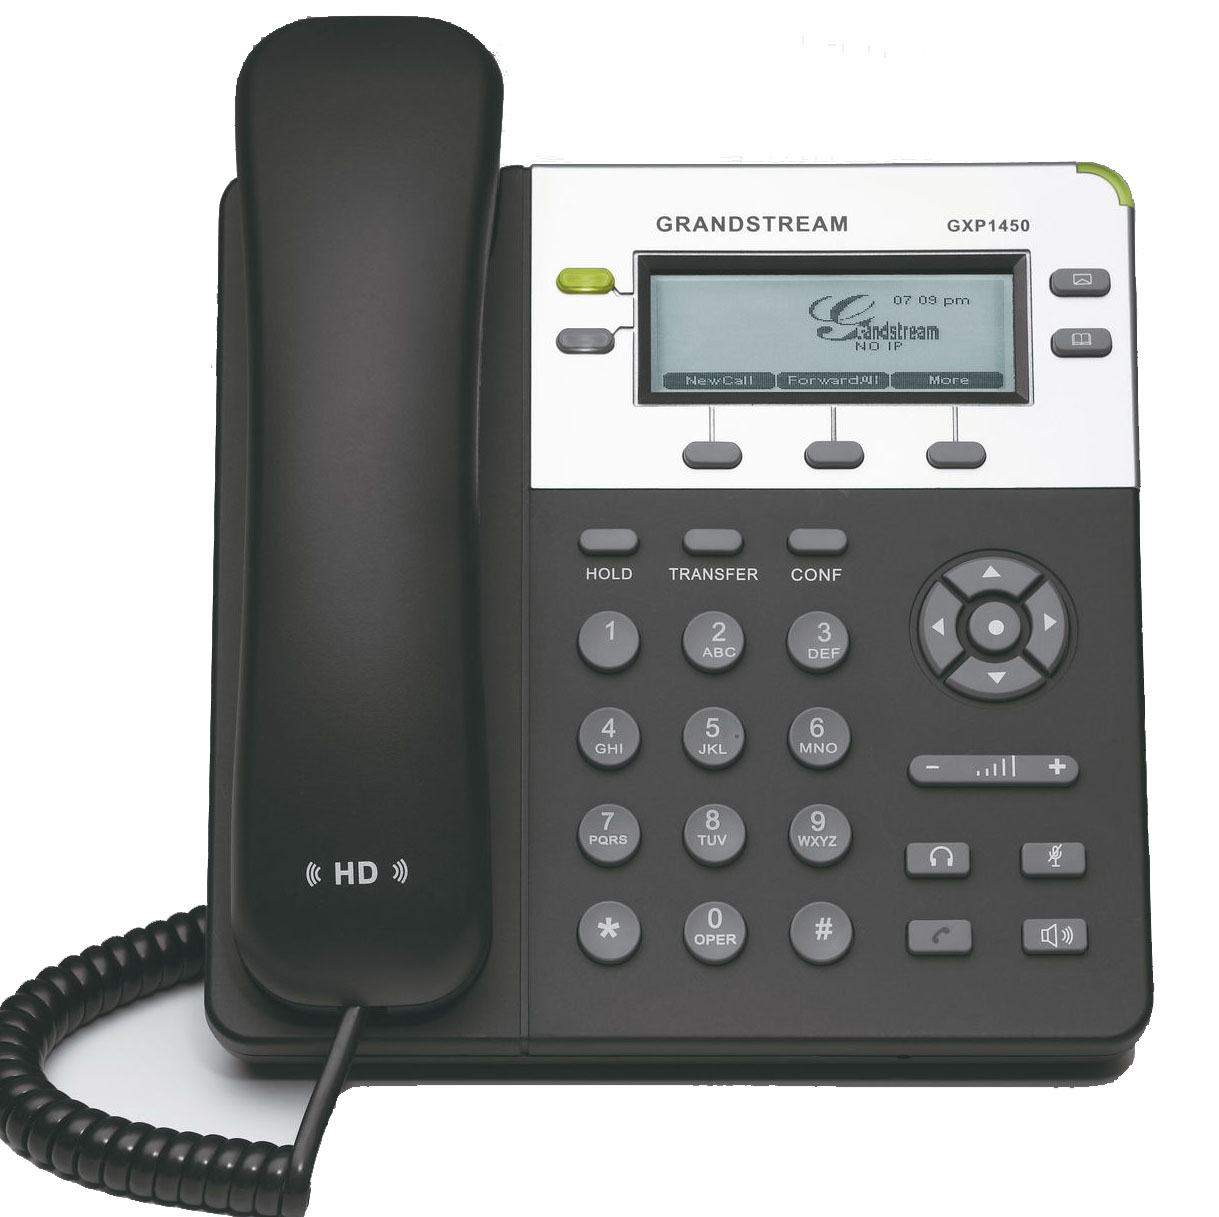 Gxp1450 2-Line Hd IP Phone W/Poe 